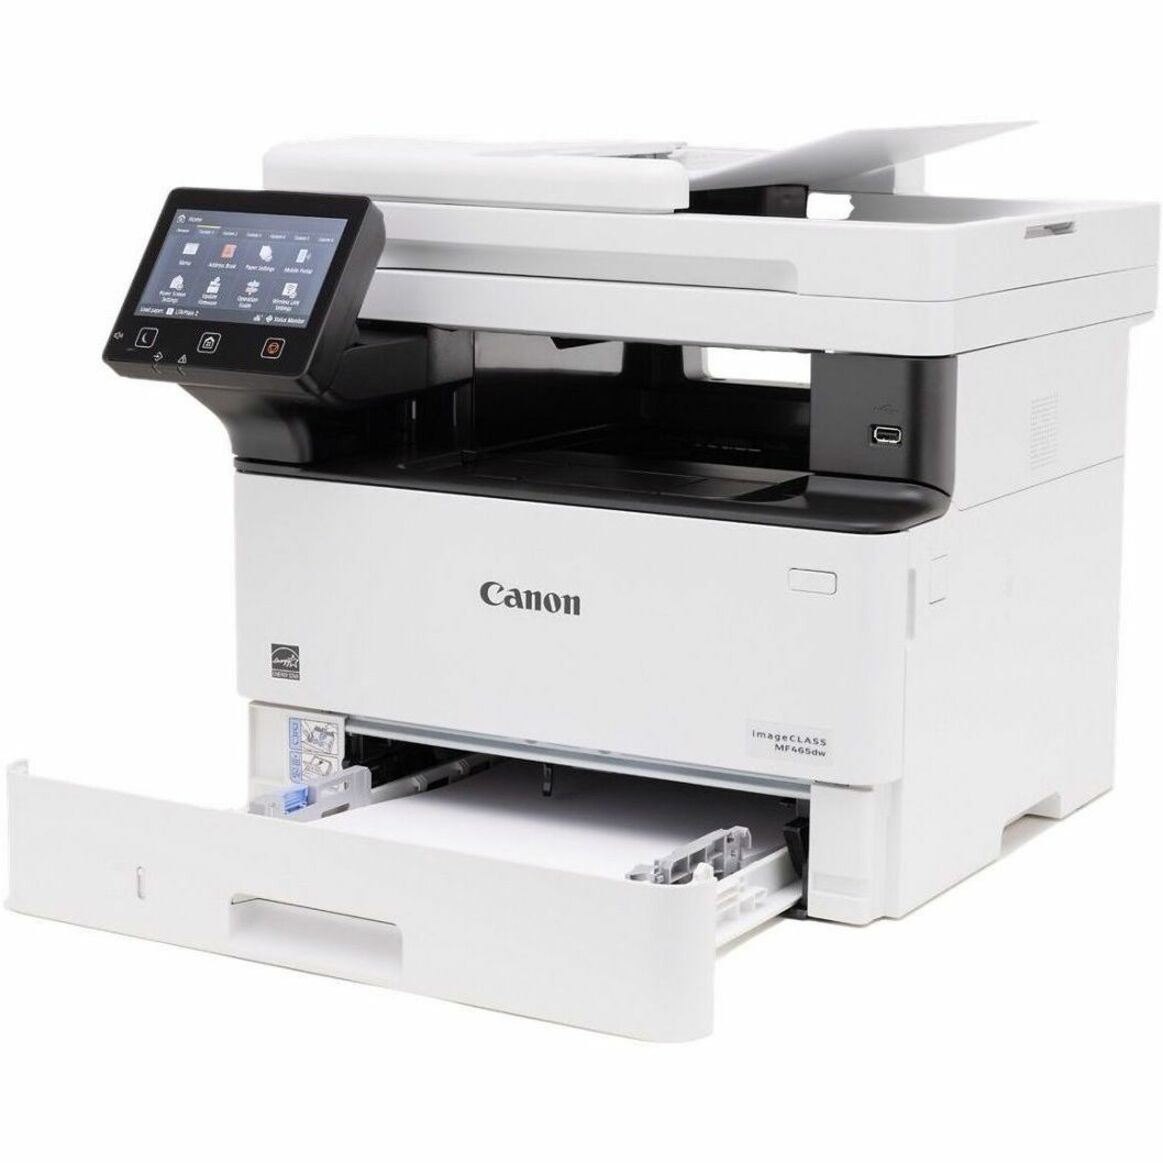 Canon 5951C005 imageCLASS MF465dw All-in-One Wireless Duplex Laser Printer, 42 ppm, 1200 x 1200 dpi